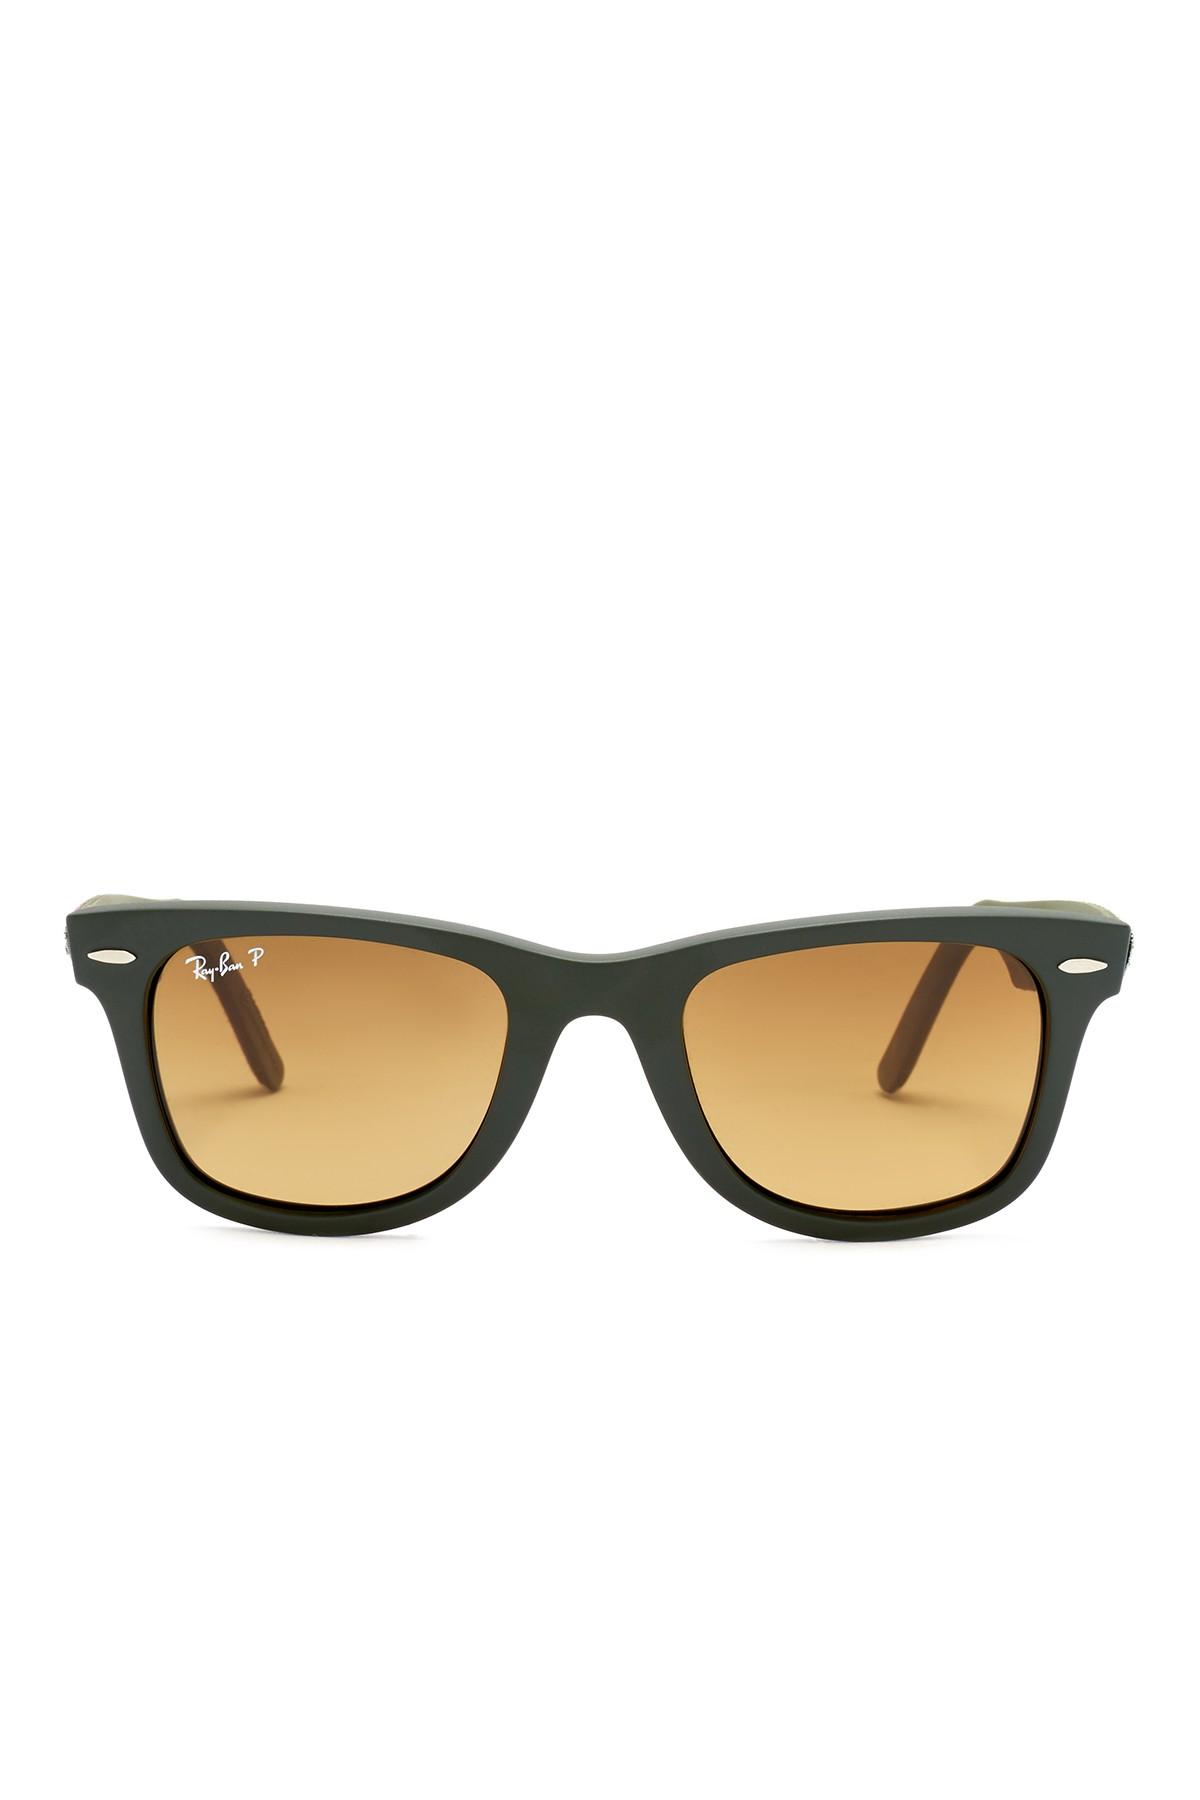 Ray-ban Women's Wayfarer Sunglasses | Lyst